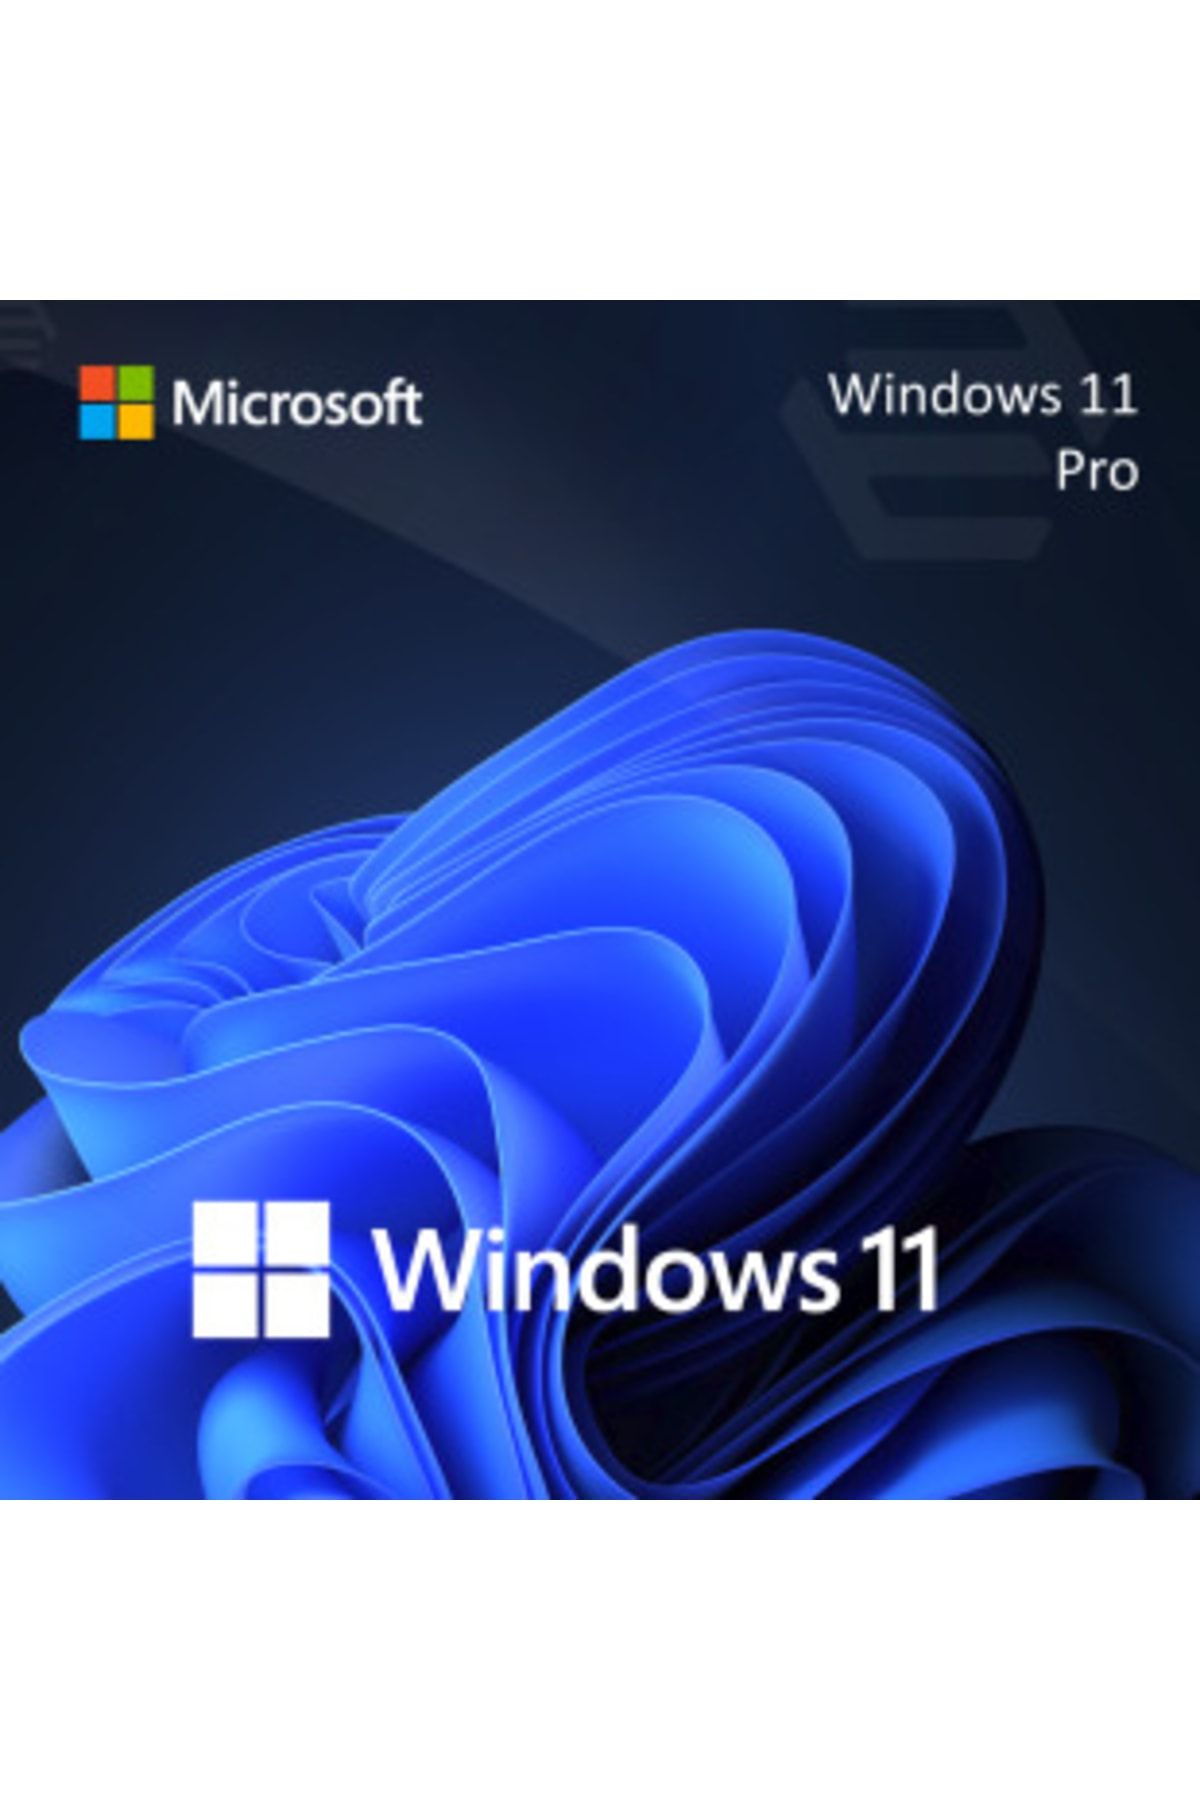 Microsoft Windows 11 Pro Lisans